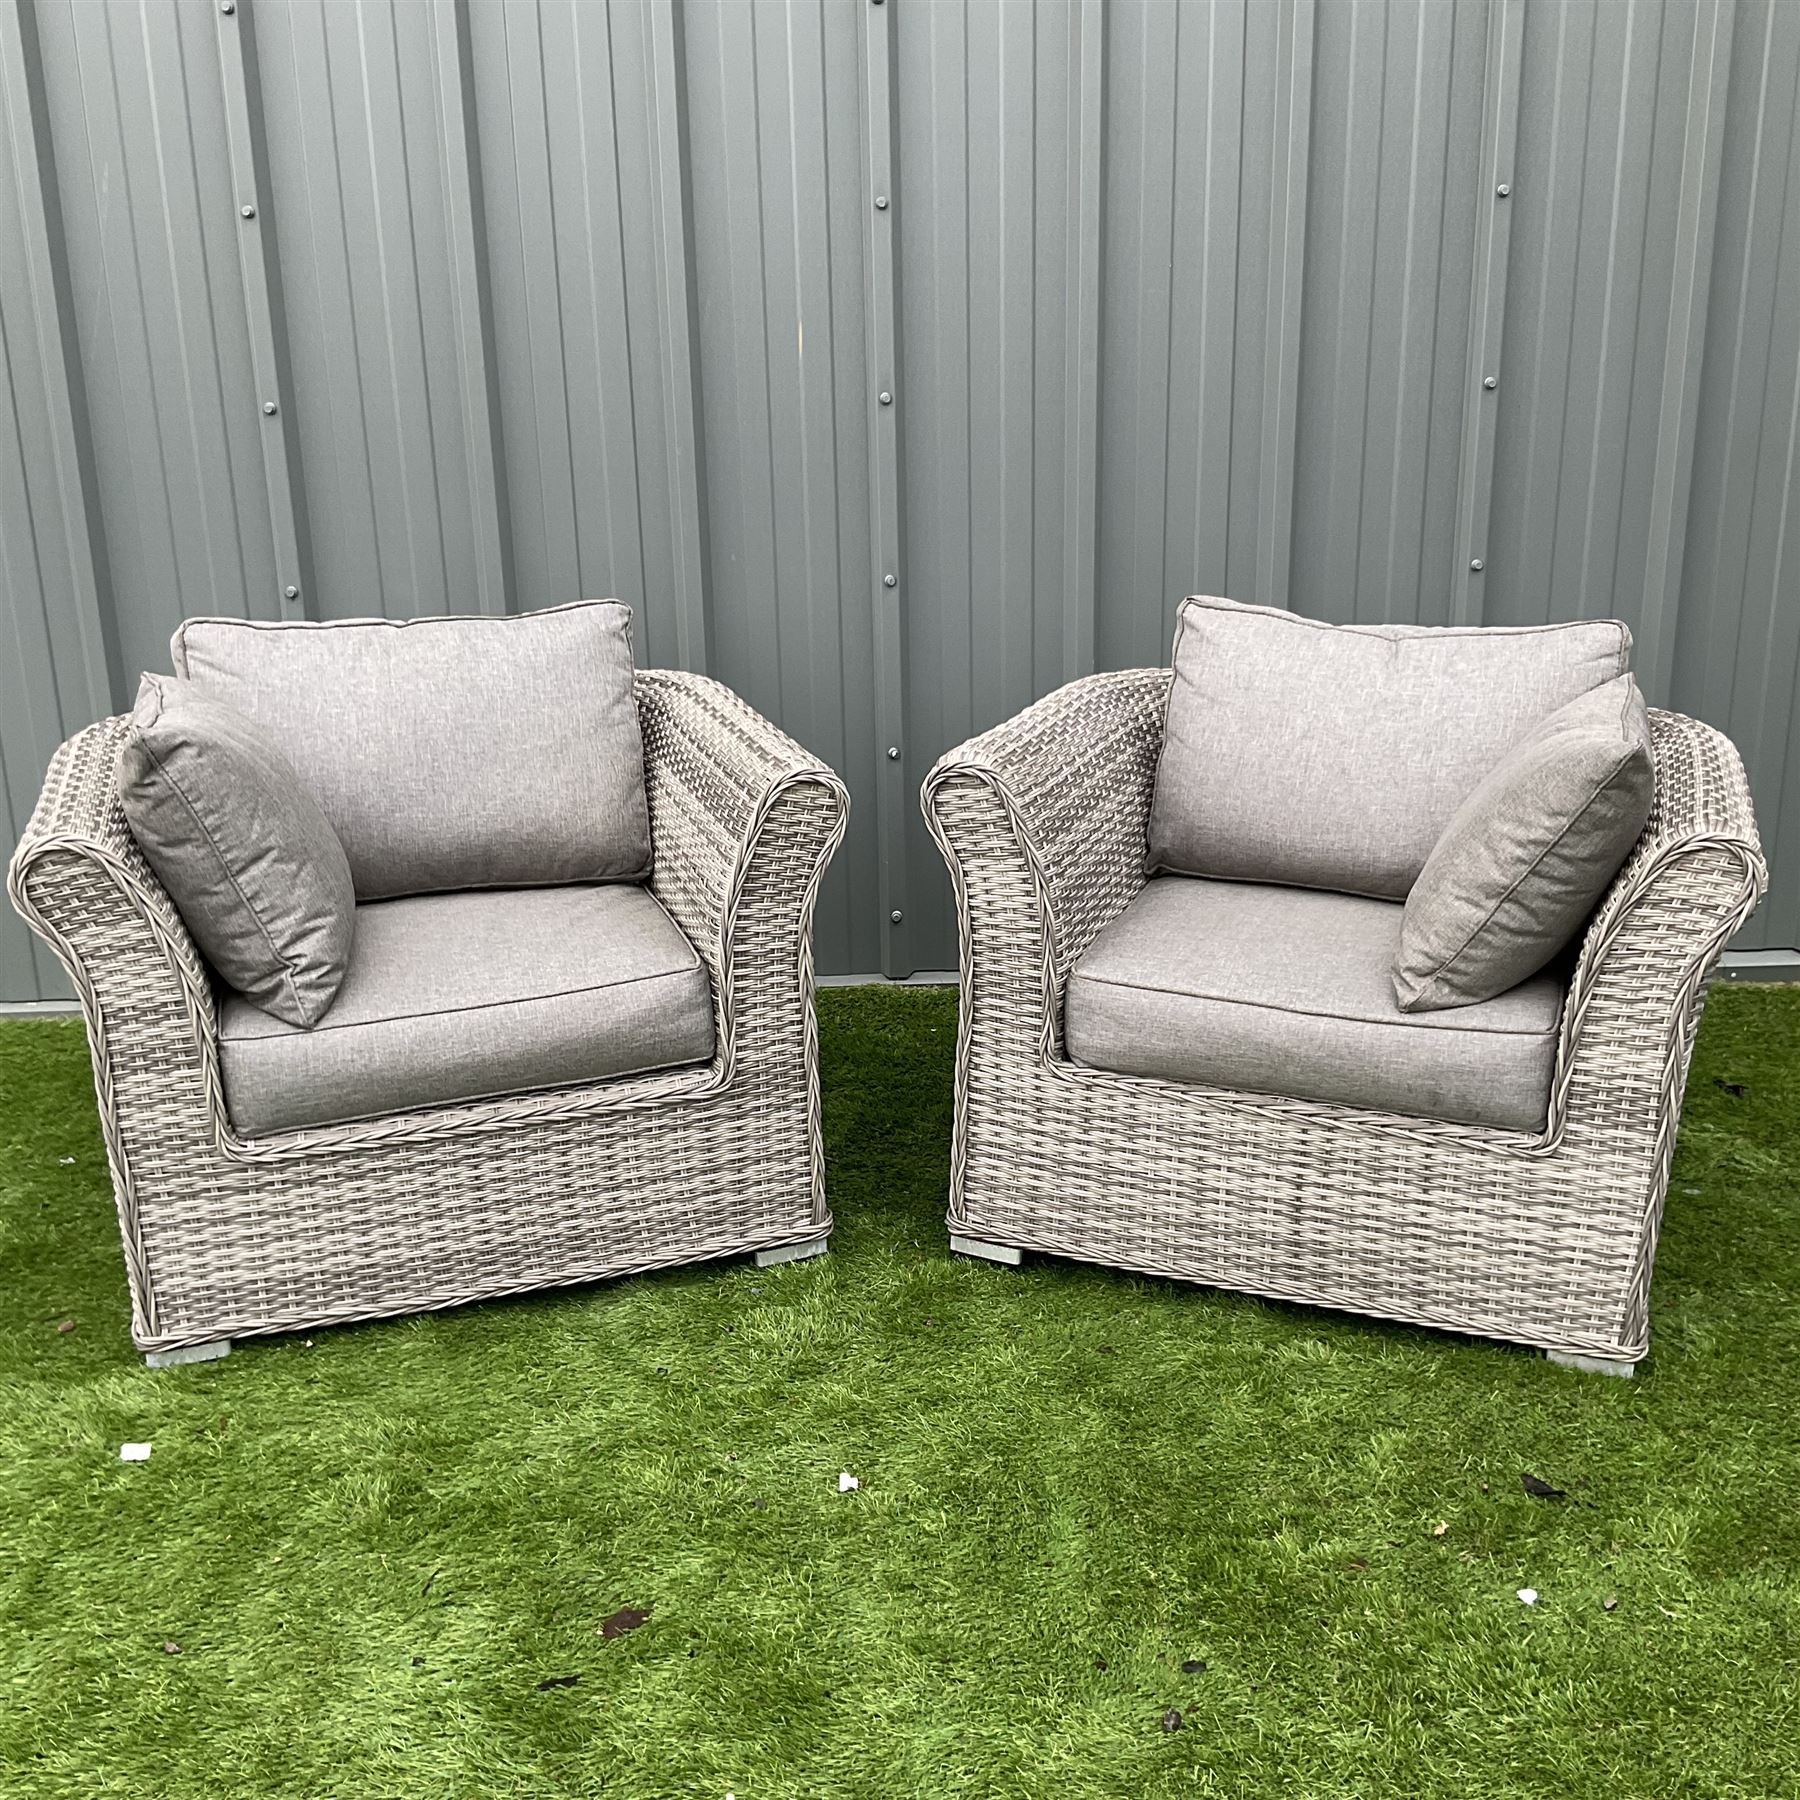 RattanDirect - pair of rattan garden armchairs